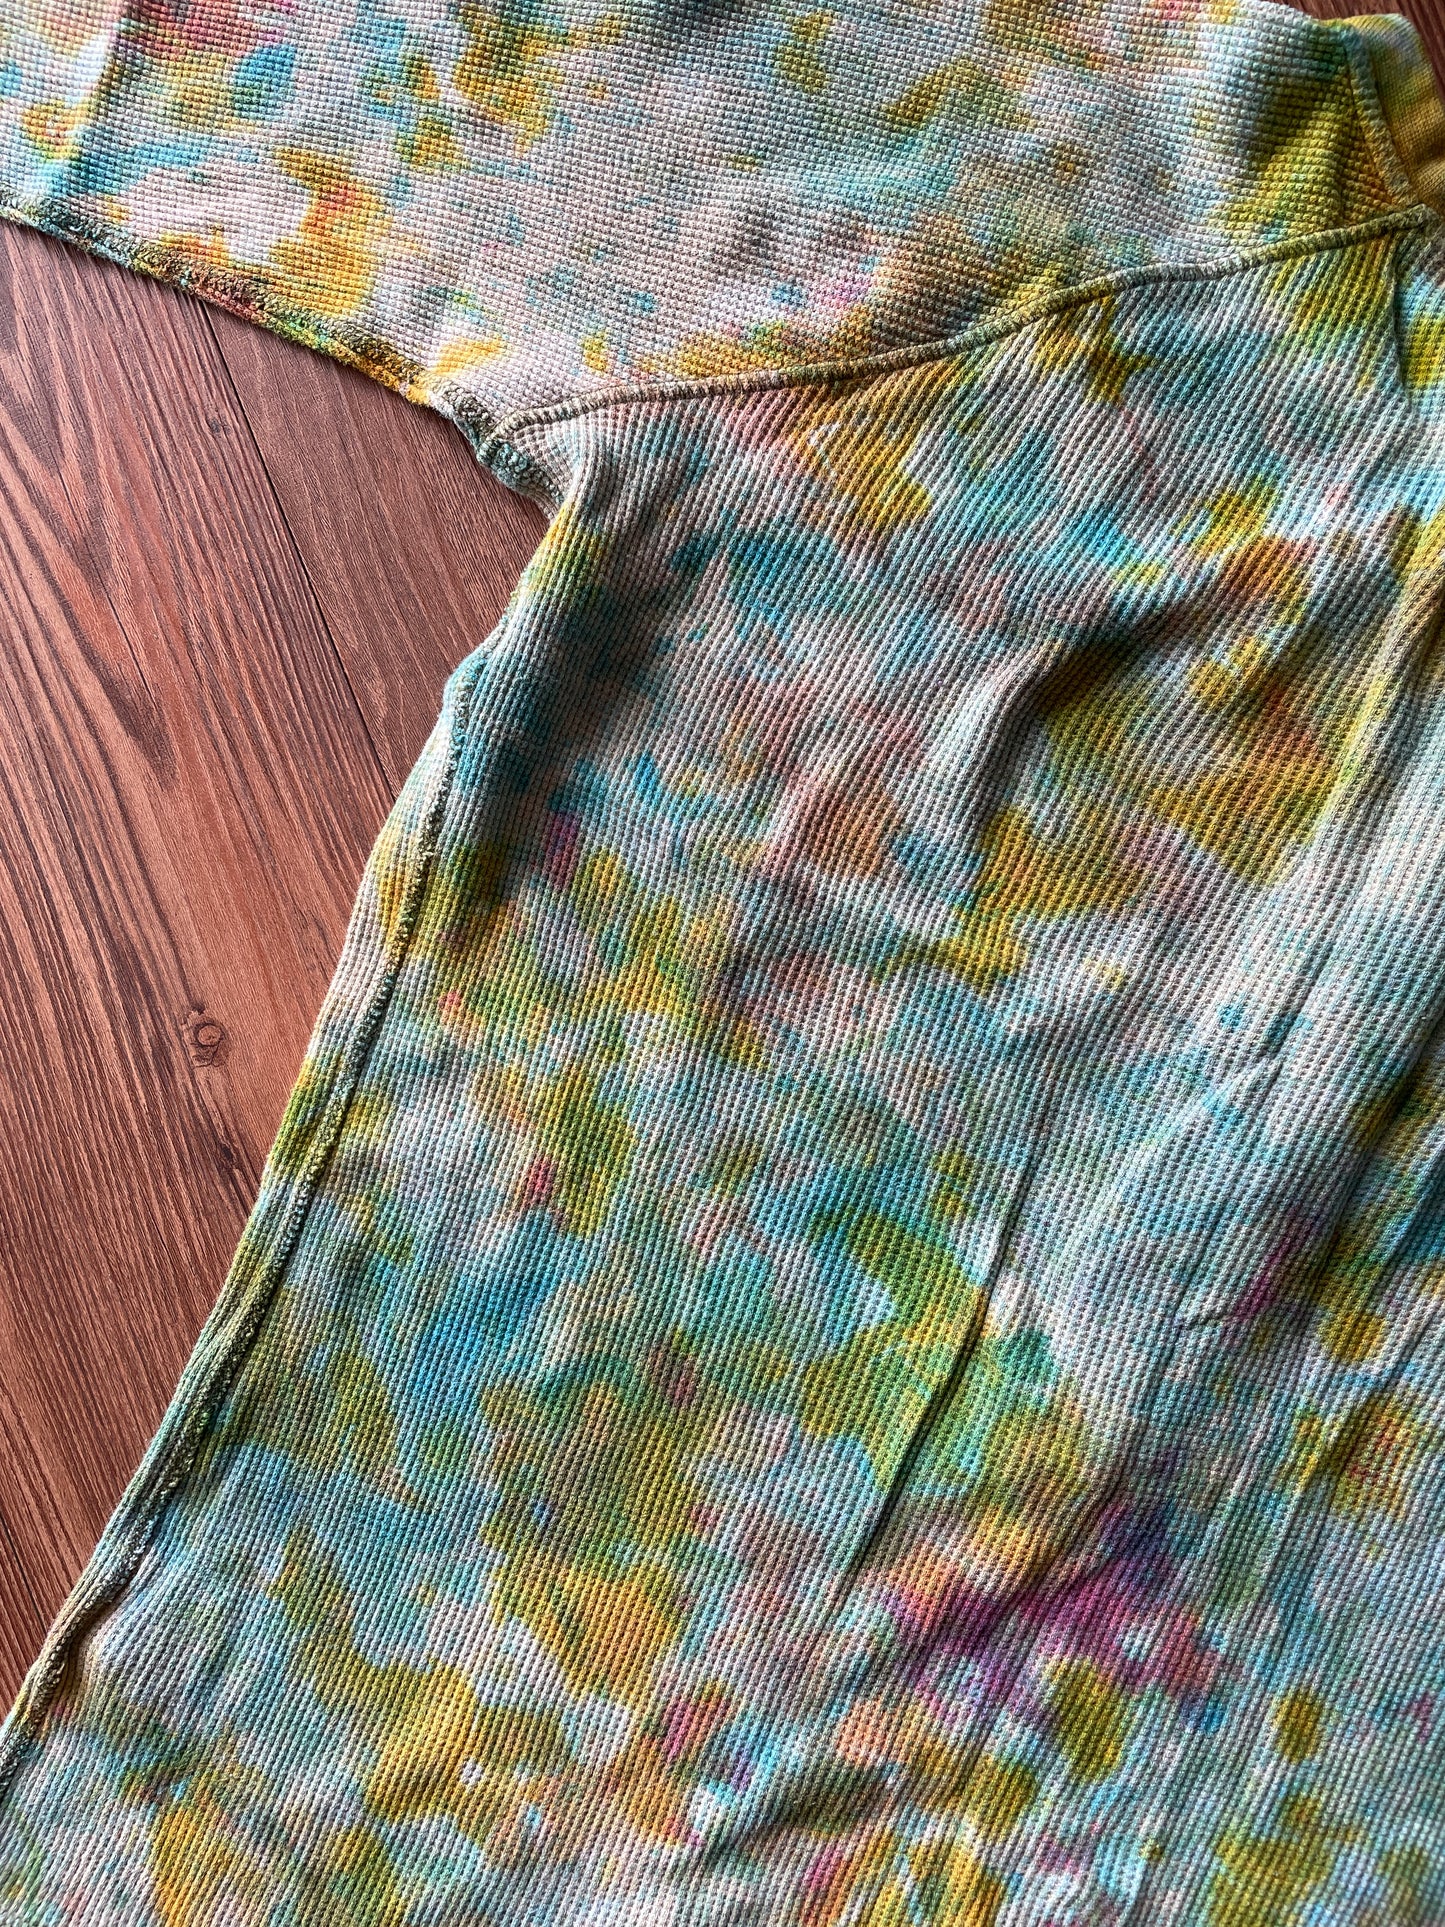 Medium Women's Patagonia Waffle Shirt | Green and Blue Tie Dye Long Sleeve